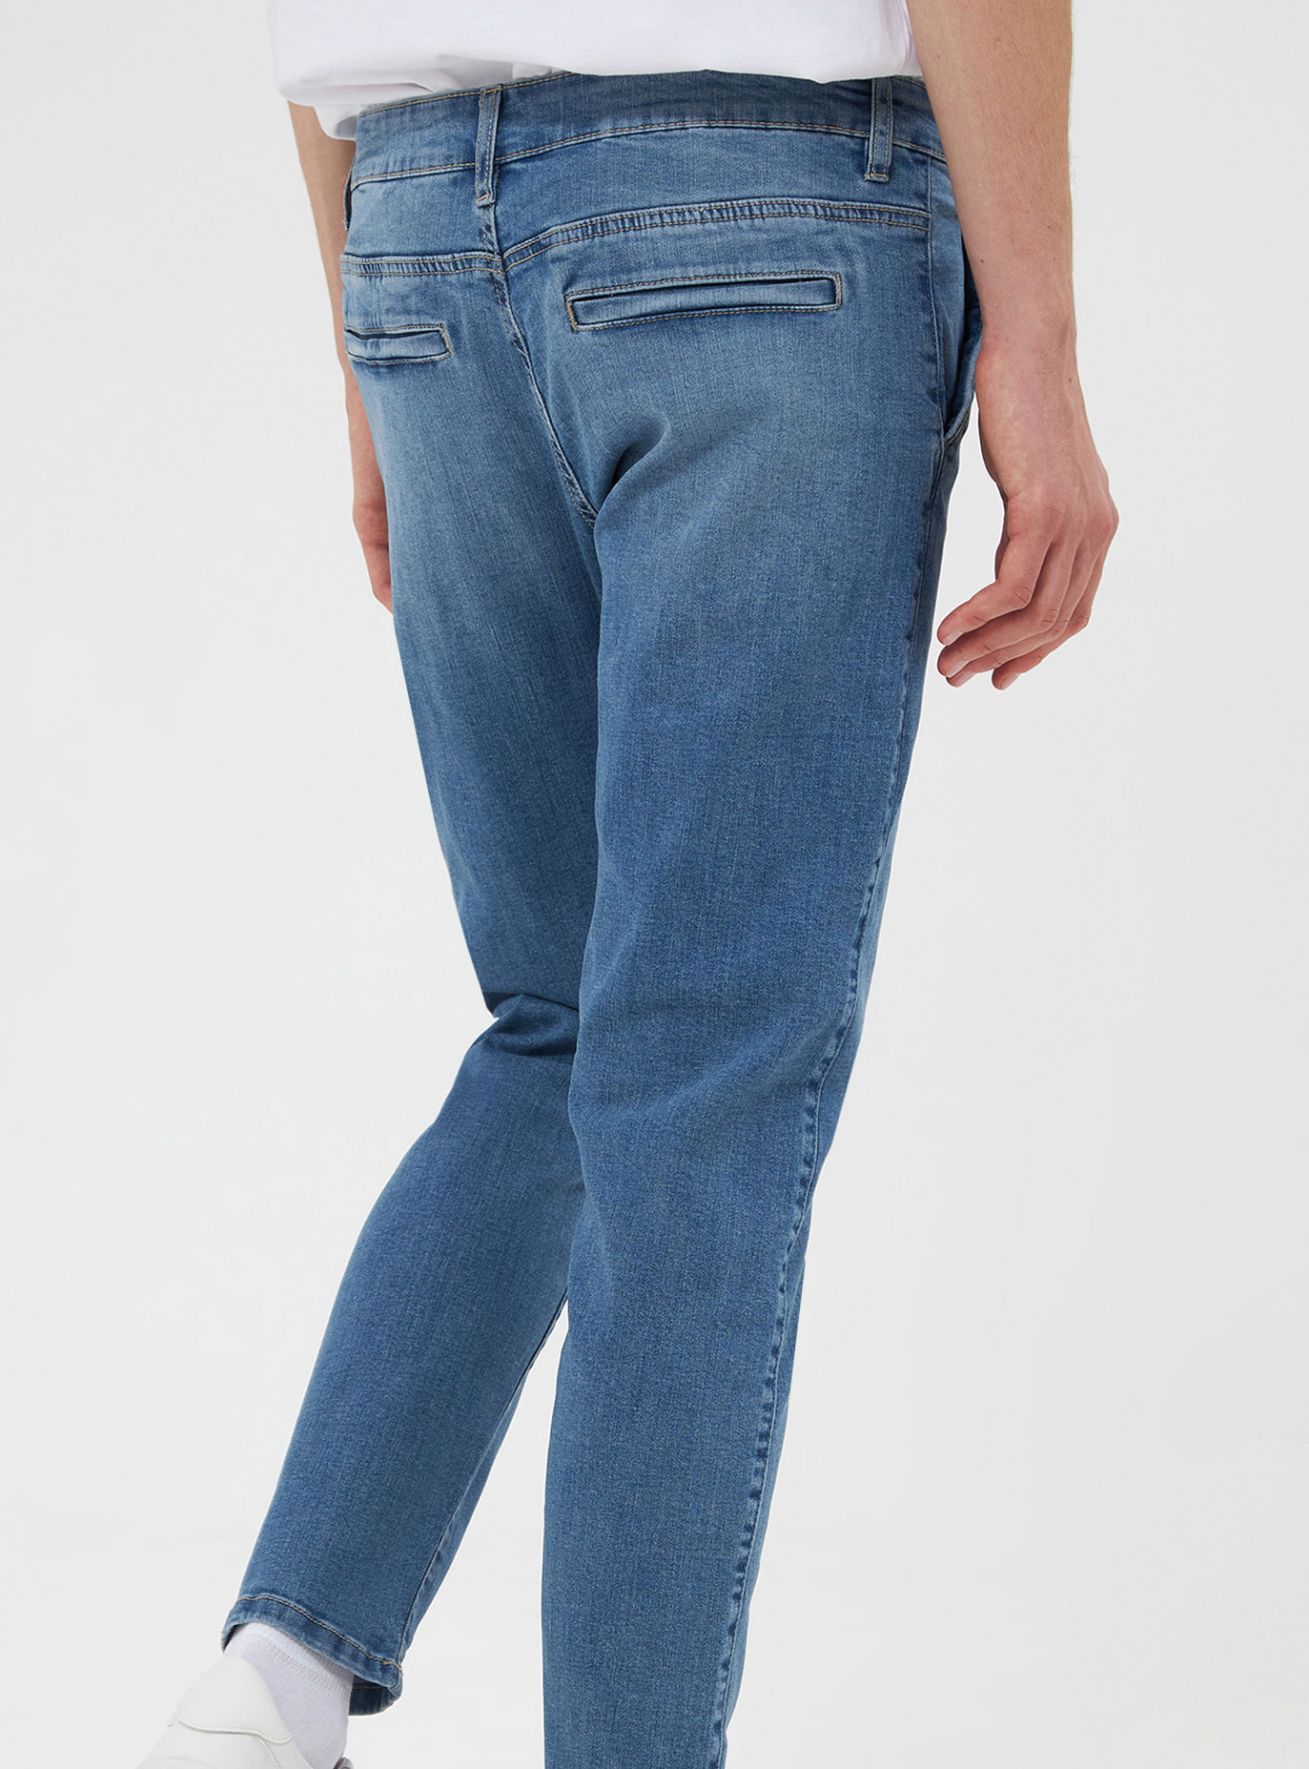 Pantalone Jeans Lungo Uomo Terranova